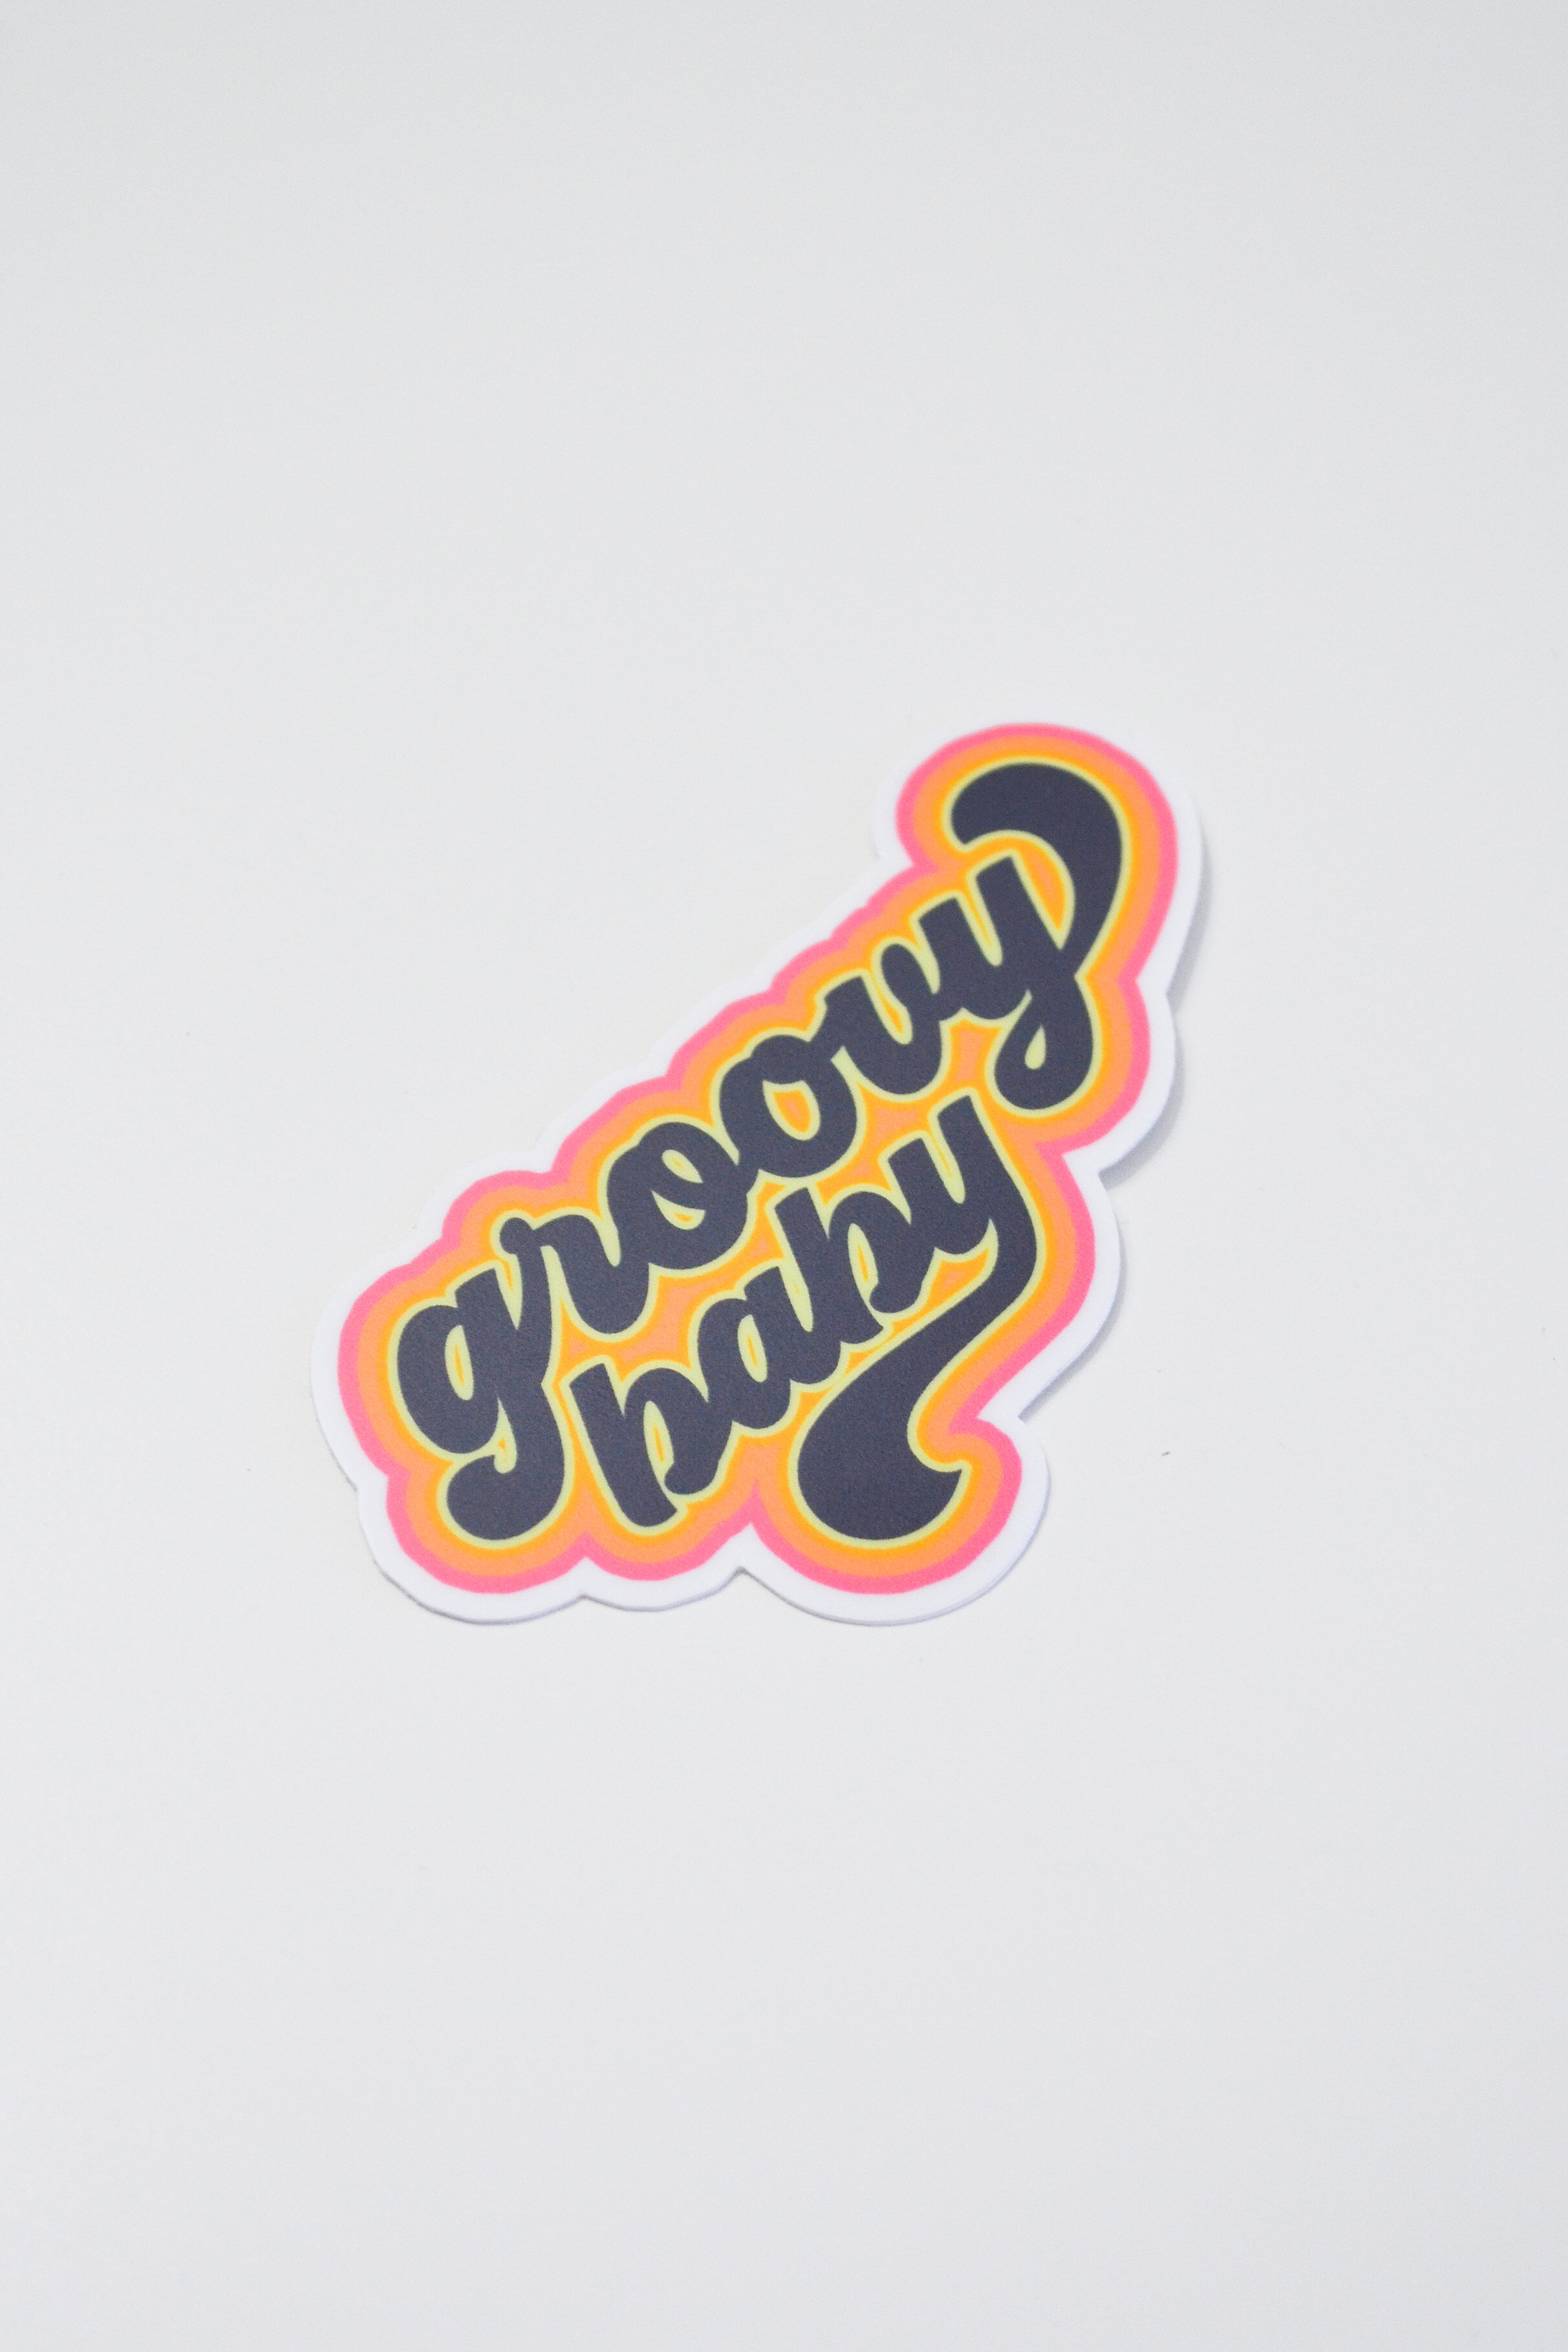 Groovy Sticker